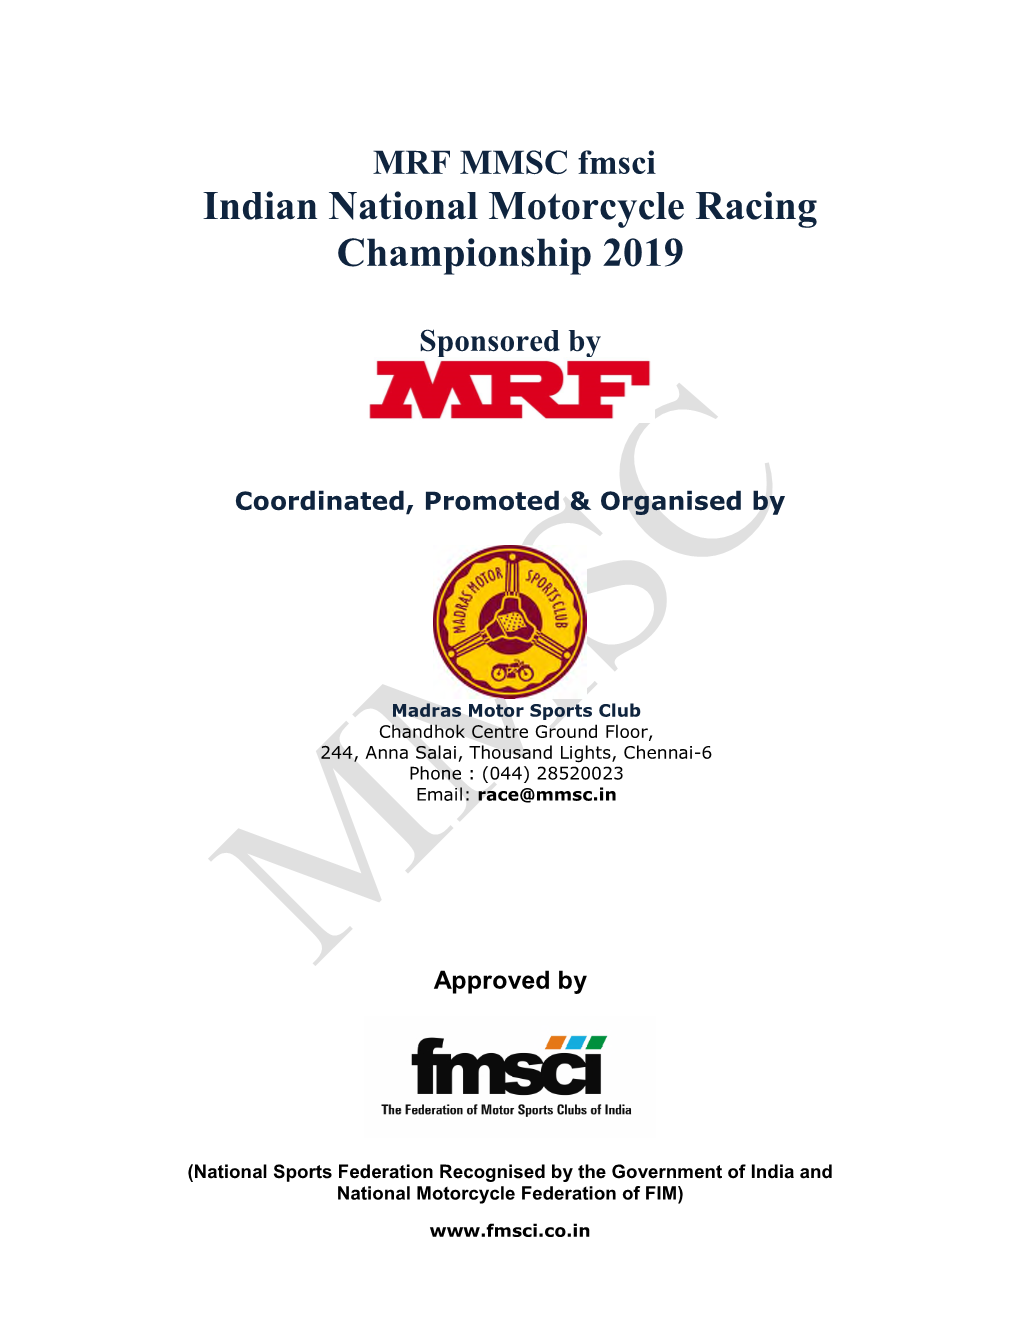 Indian National Motorcycle Racing Championship 2019